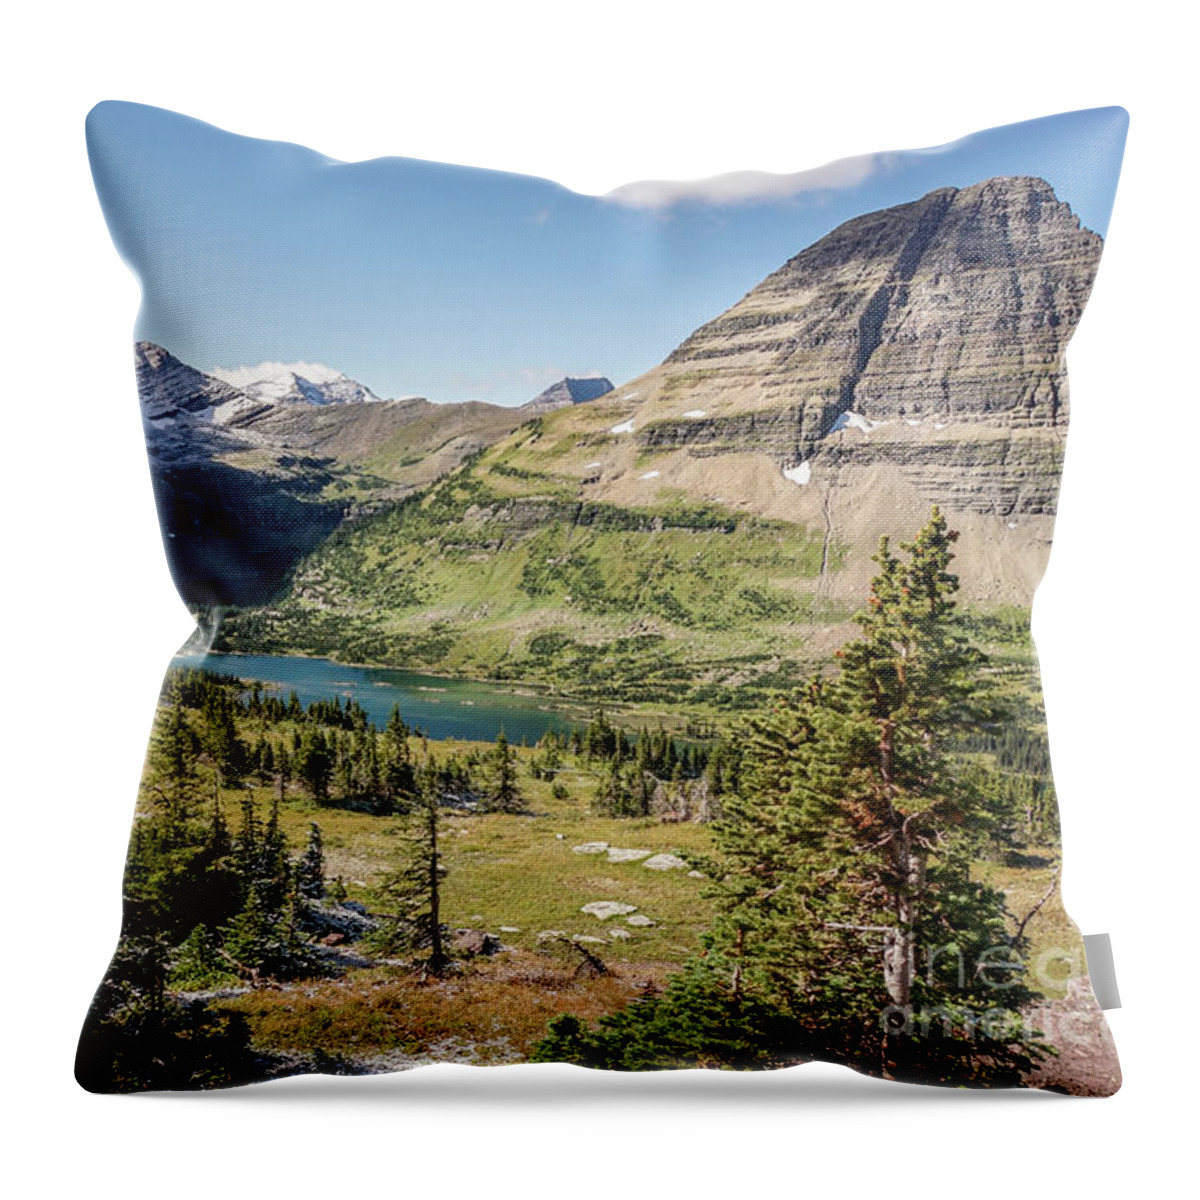 Bearhat Mountain Throw Pillow featuring the photograph Bearhat Mountain and Gunsight Mountain by Nancy Gleason